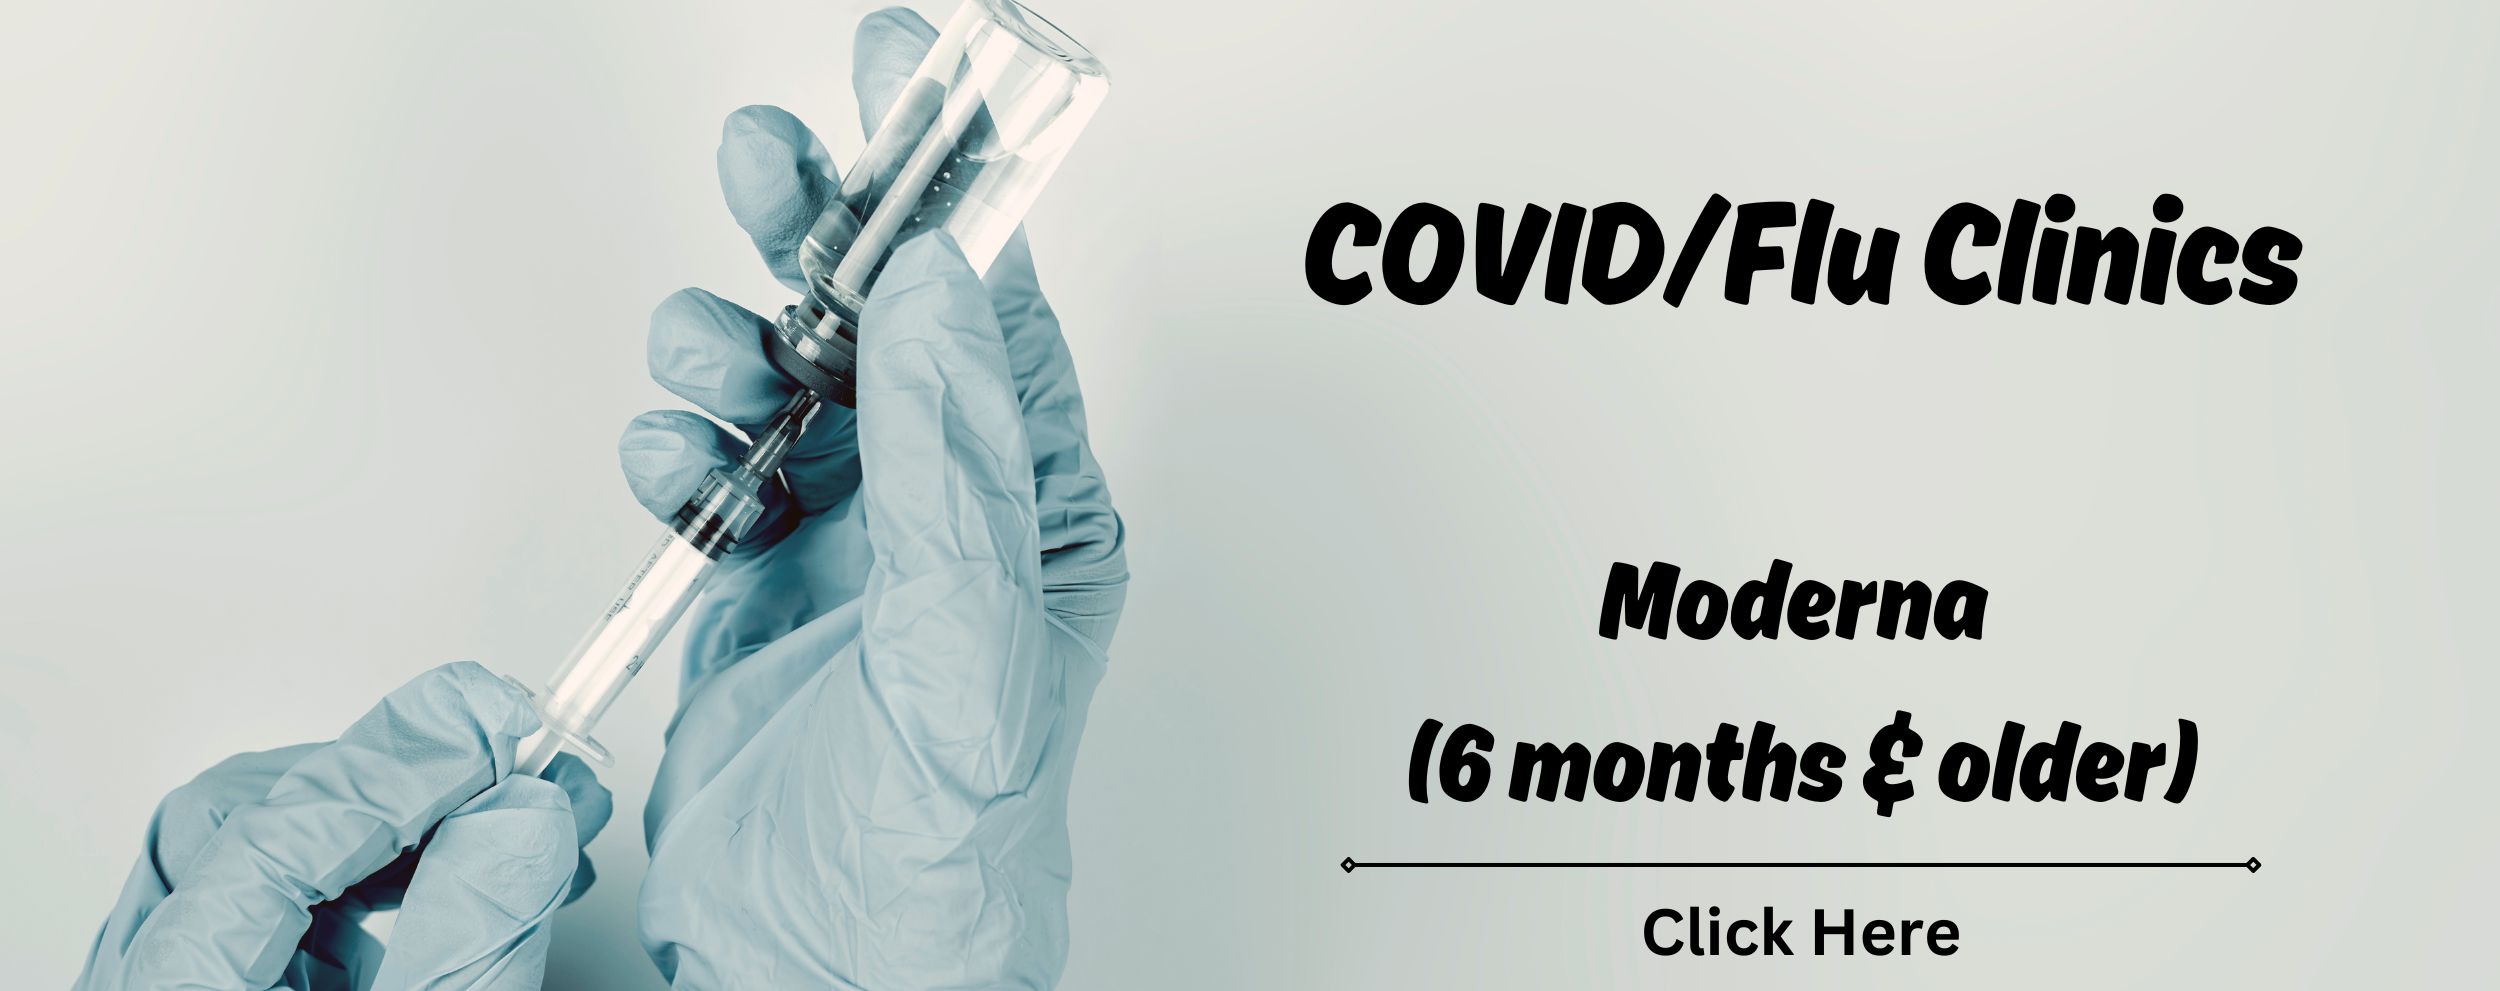 COVID/Flu Clinics - Click here